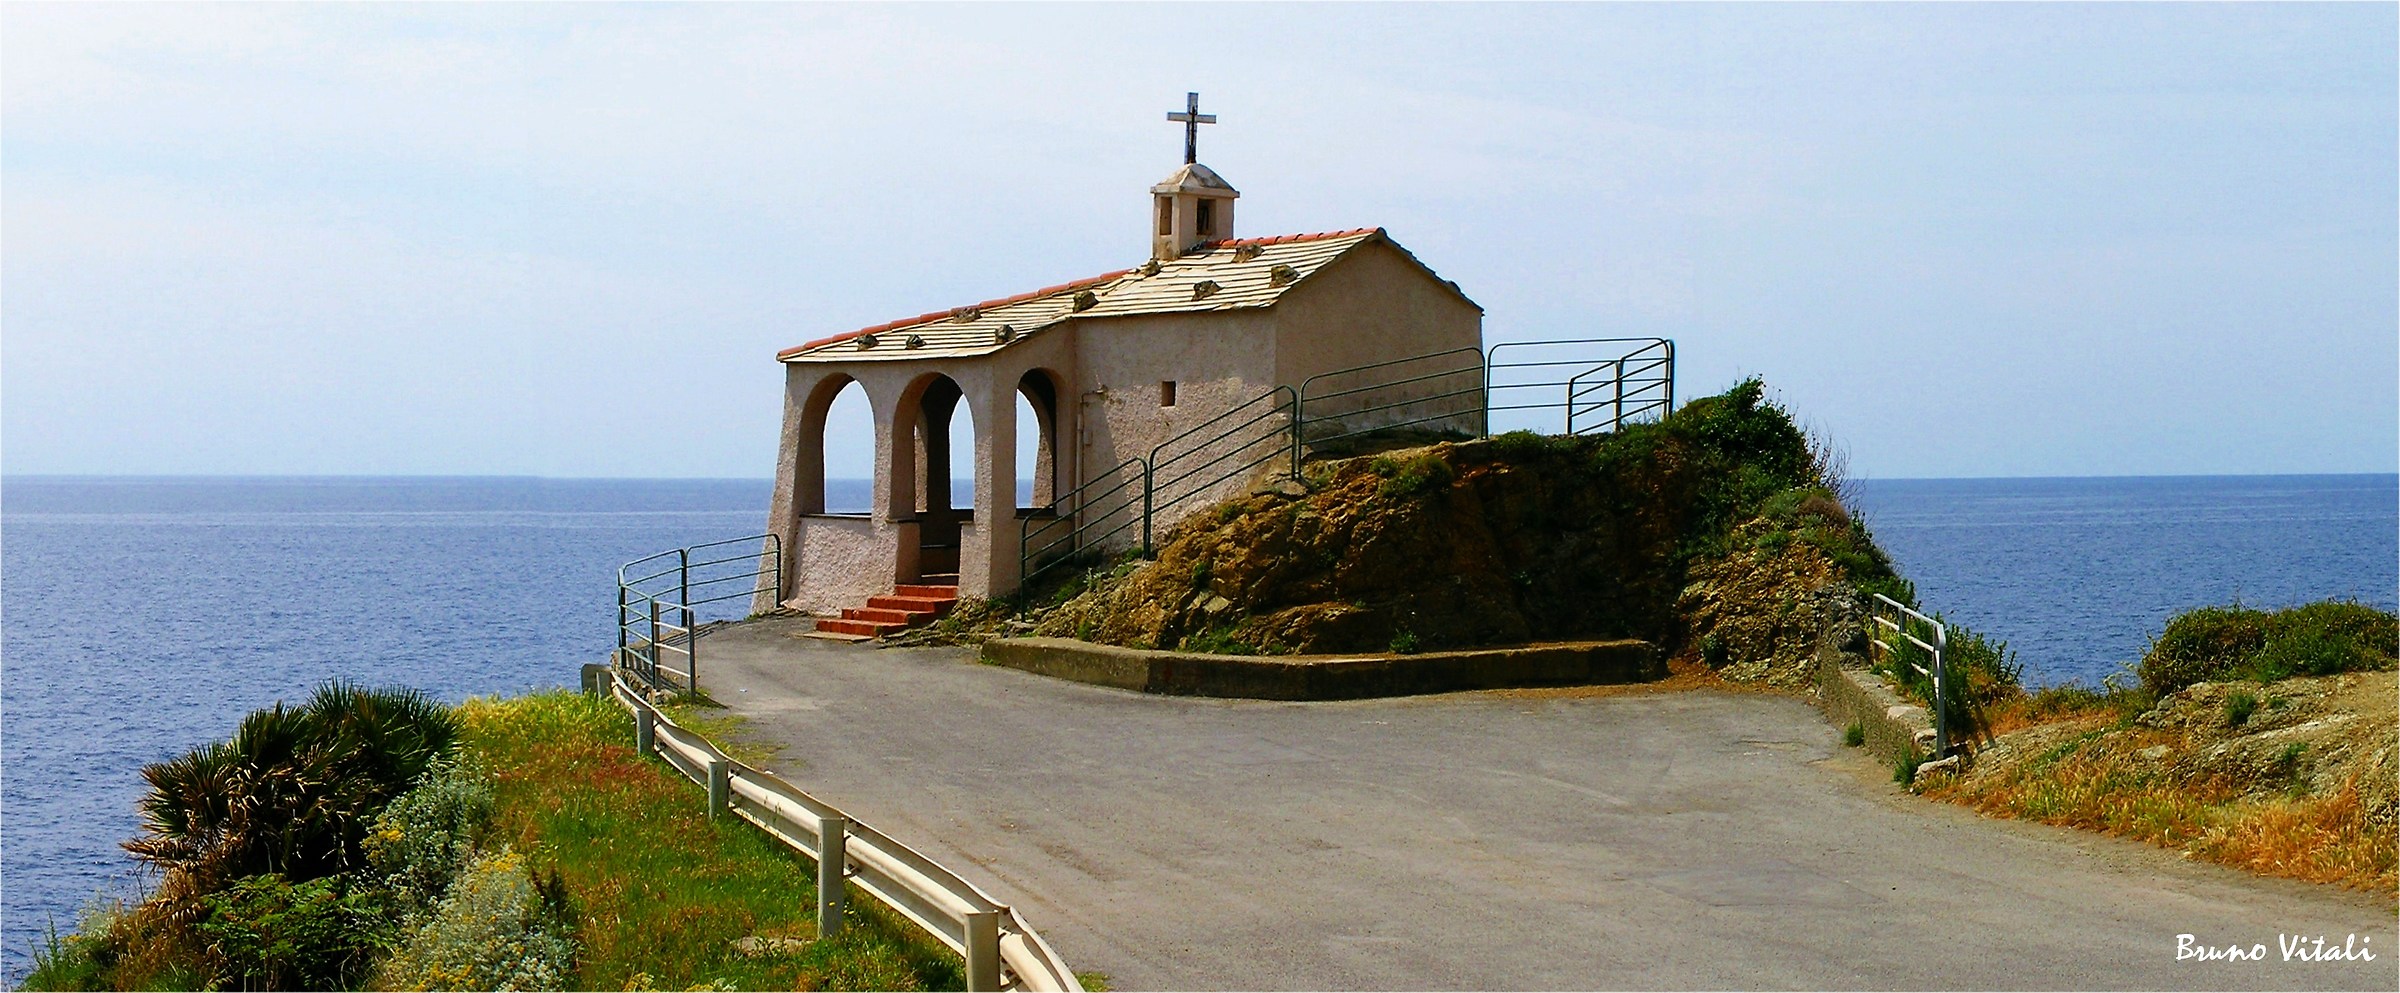 Church of Bonaxola 2003...